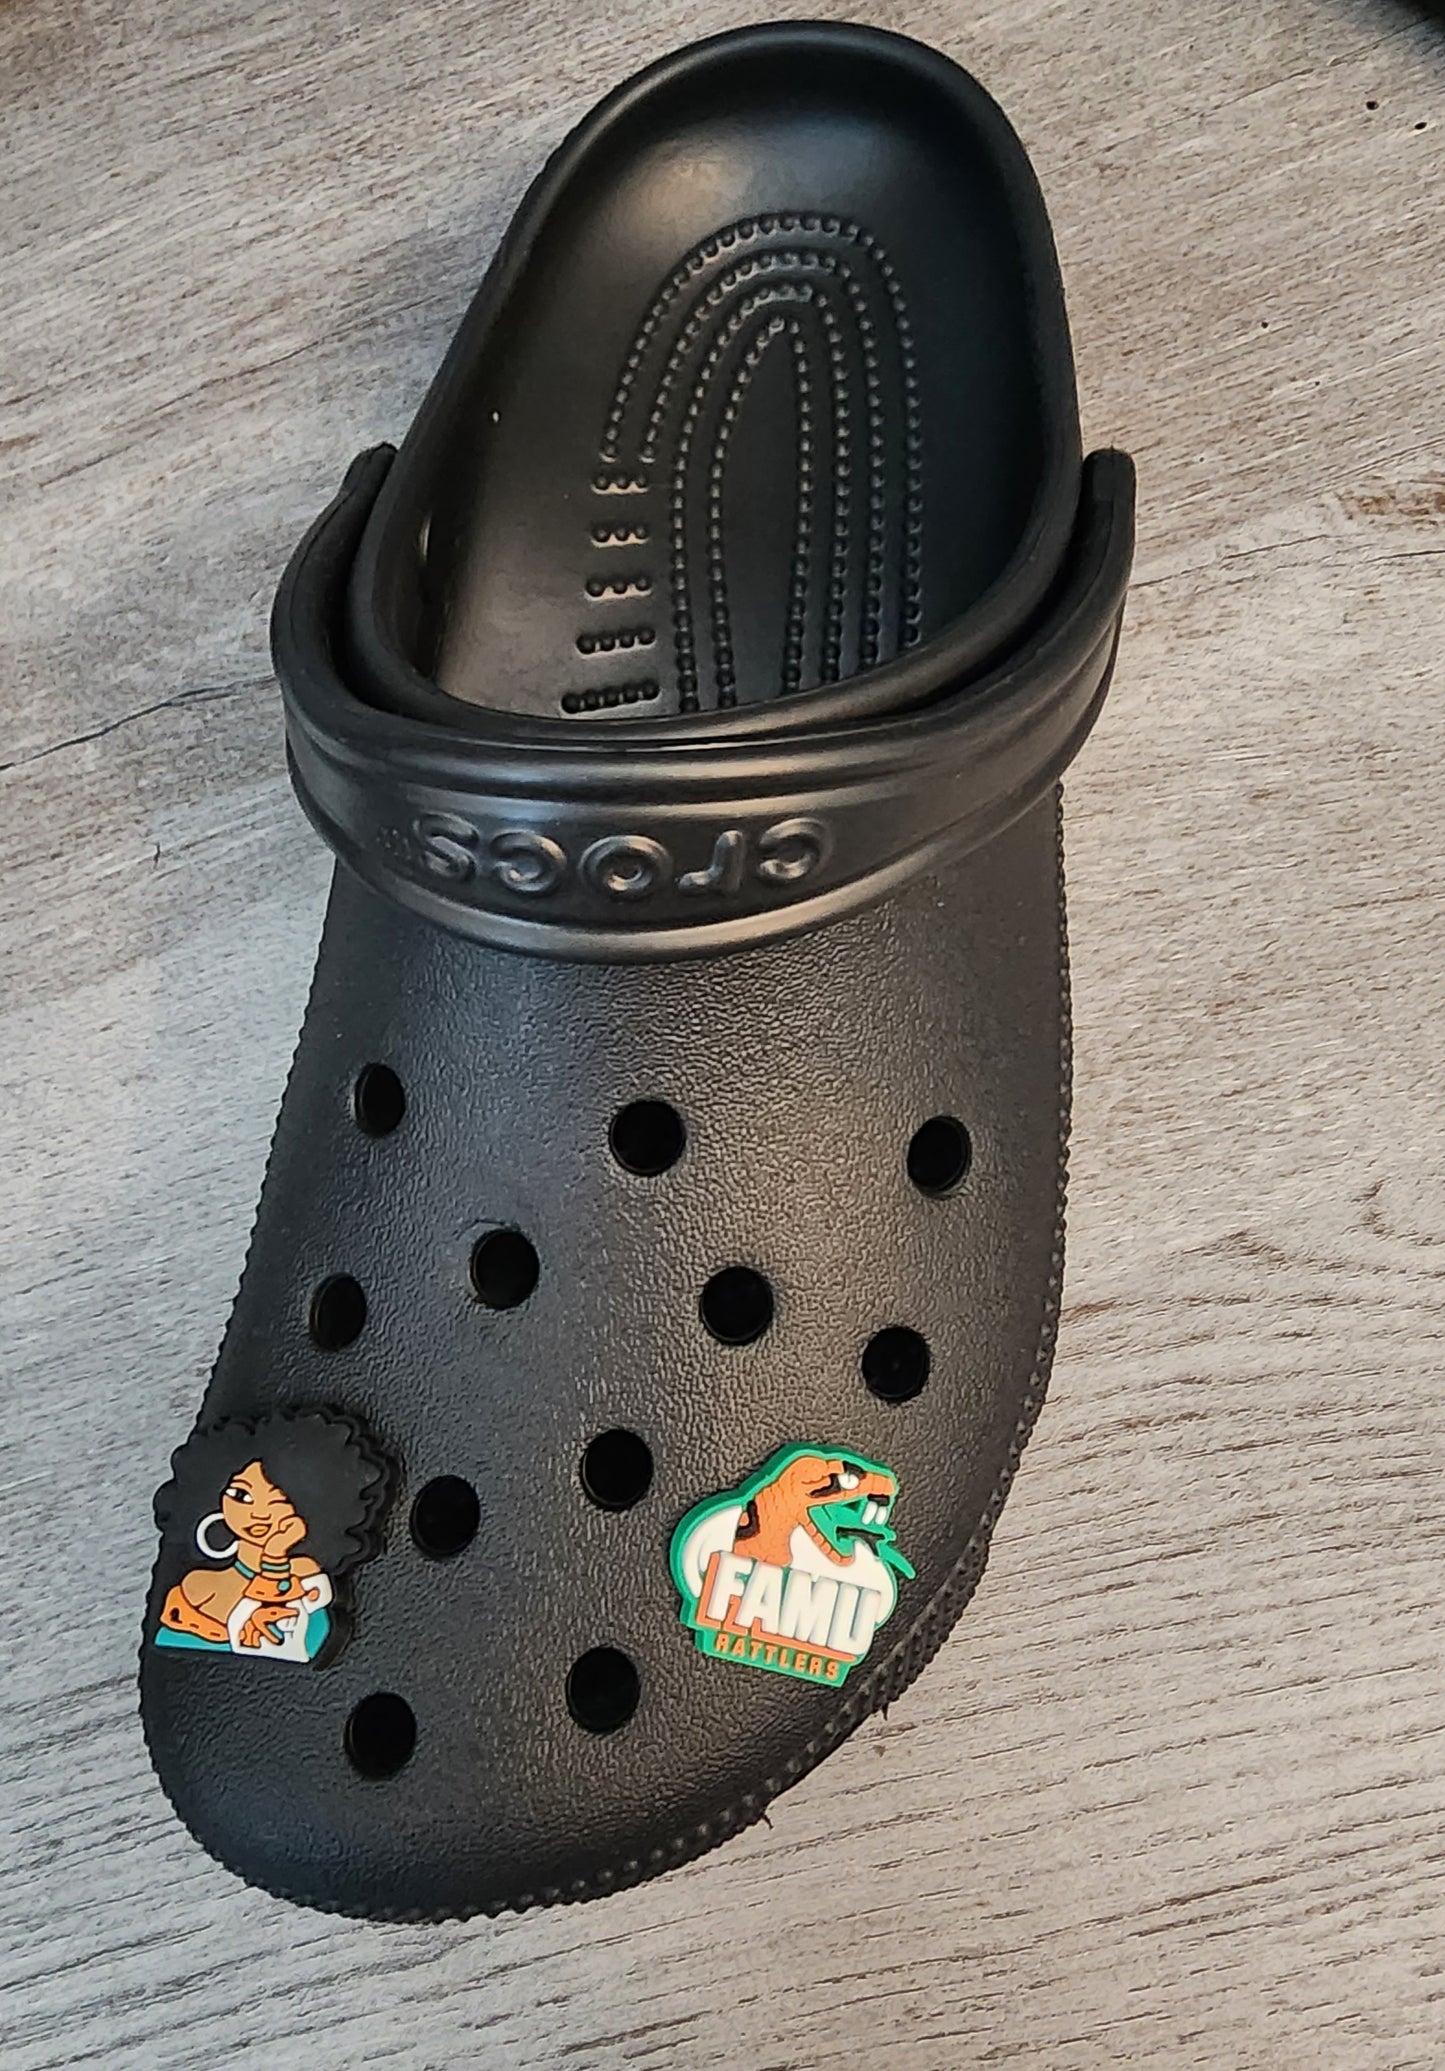 Famu Rattler Croc charms